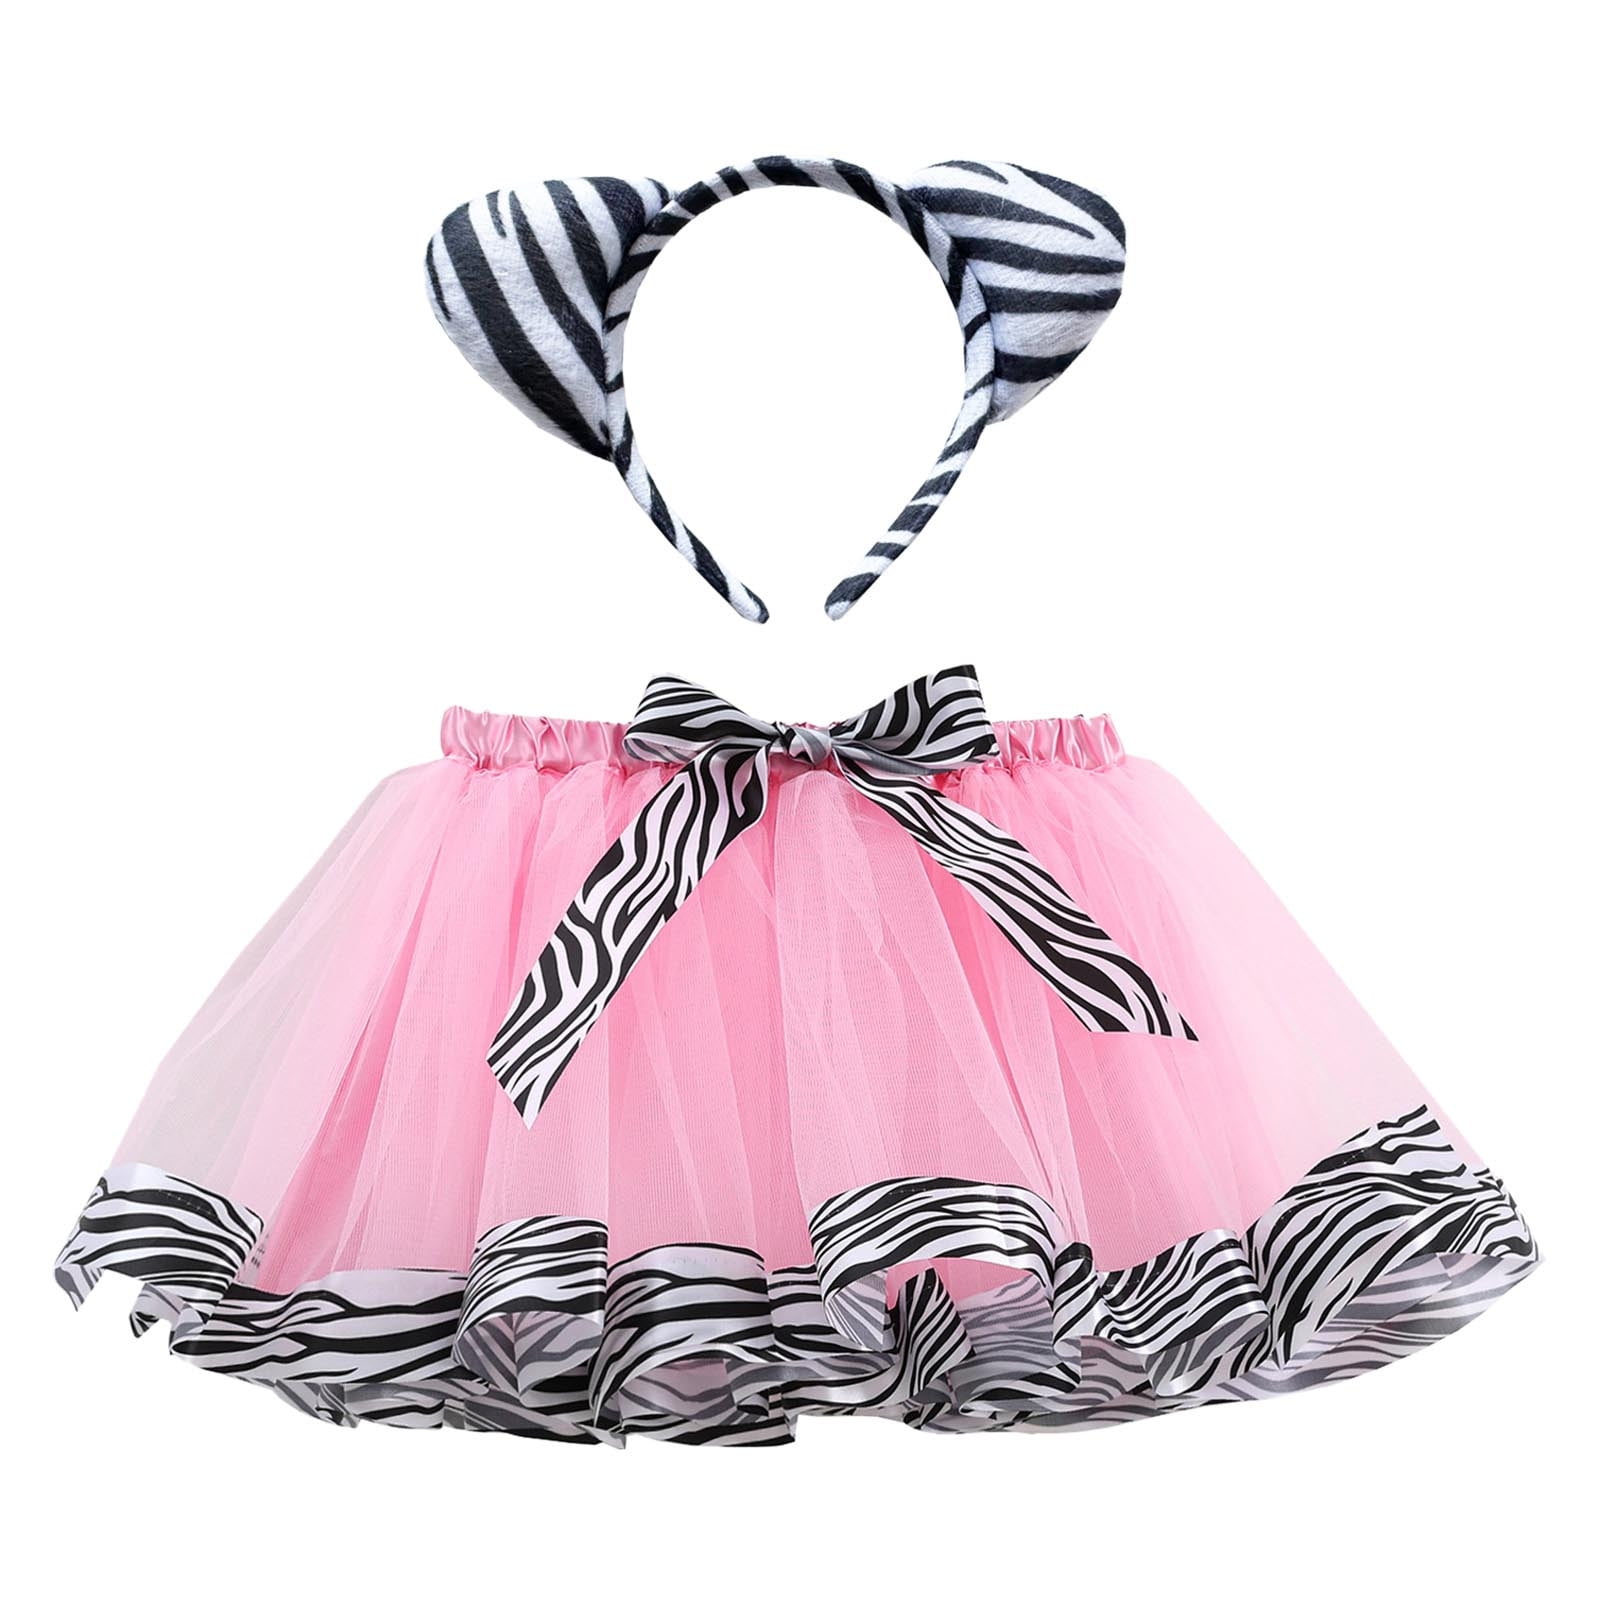 Akiihool Dancewear Skirt for Girls Layered Versatile Dance Tulle Skirts ...